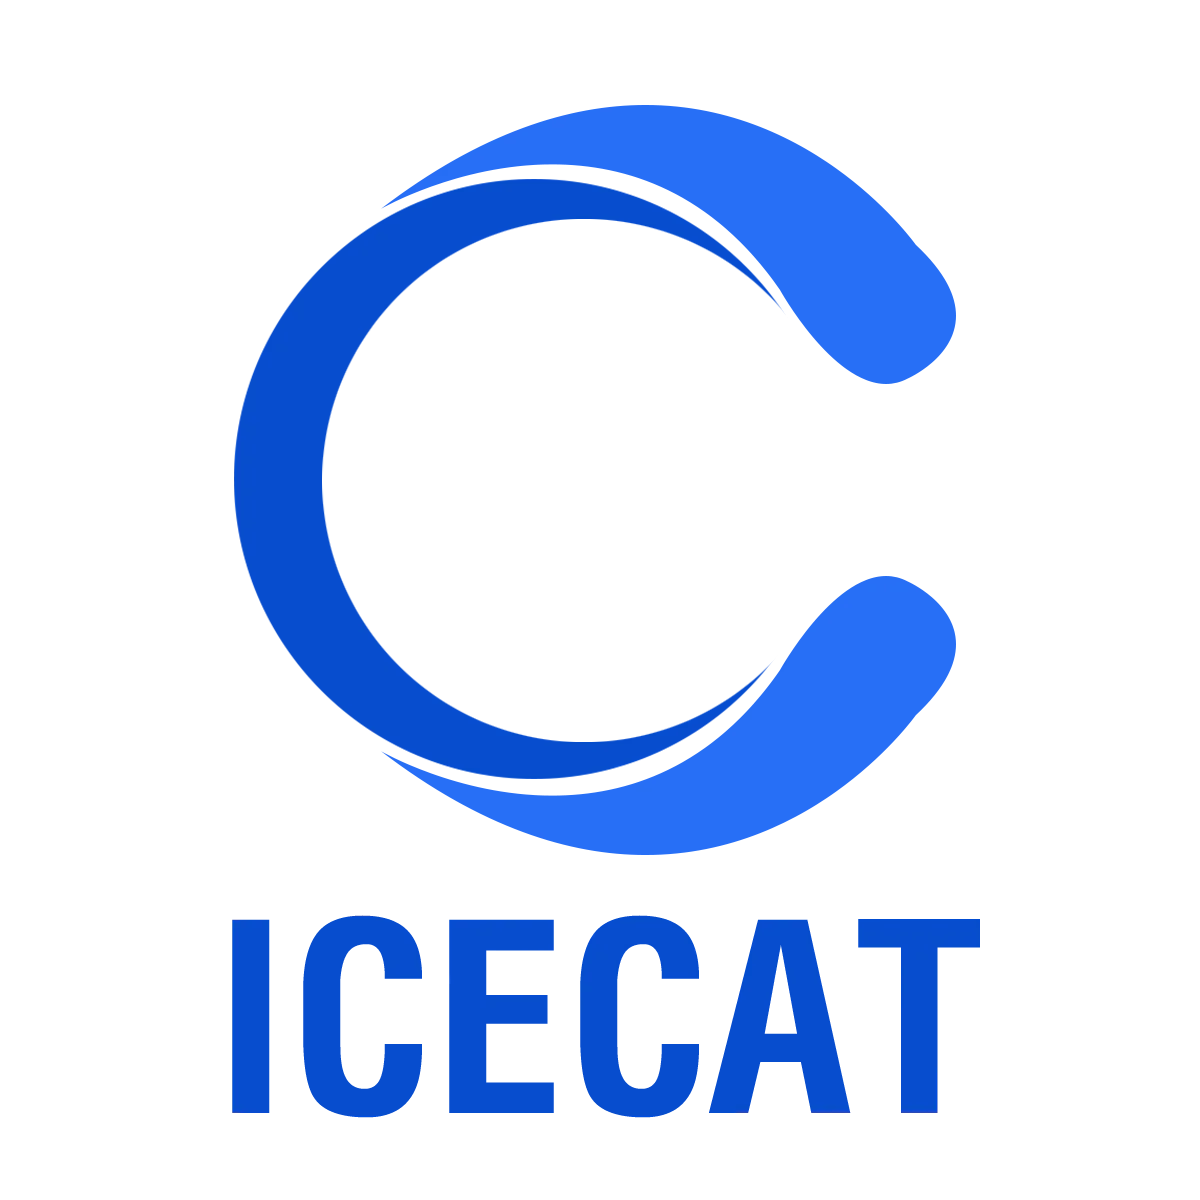 IceCat